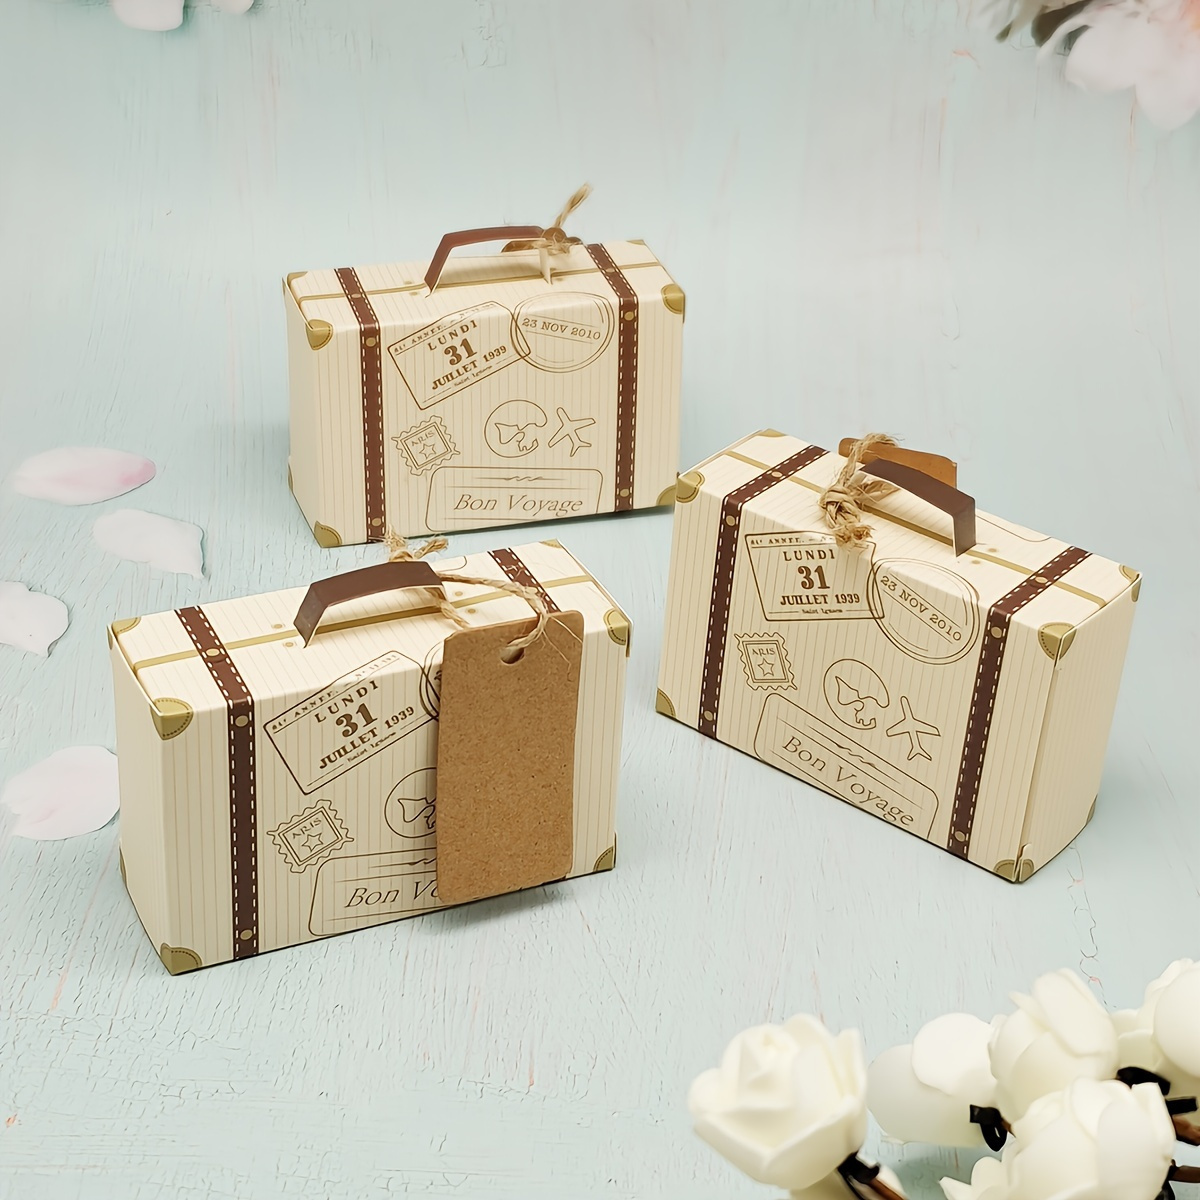 Maletas de cartón: cajas de almacenamiento decorativas de cartón,  decoración de maleta vintage, pequeñas cajas de cartón dulces, decoración  de